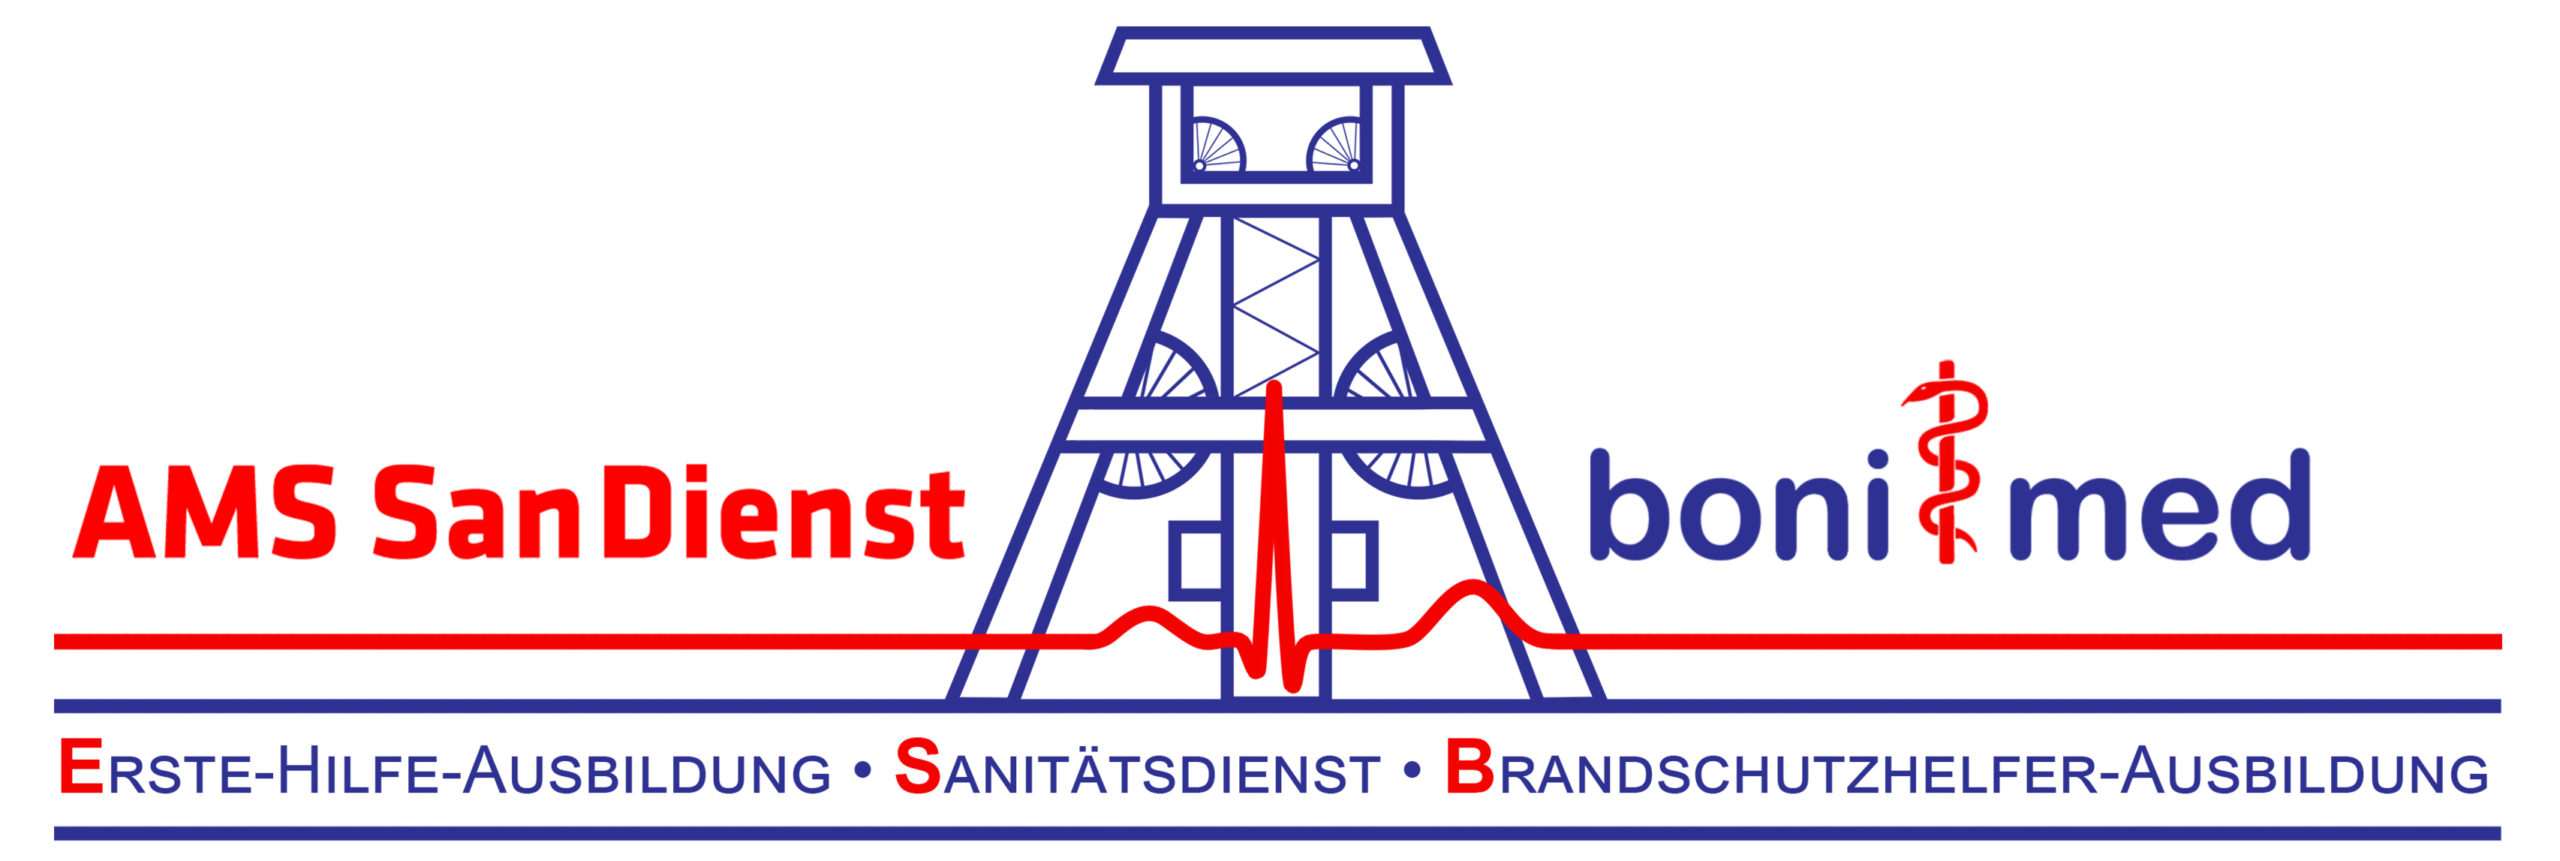 AMS-SanDienst-Logo-fertig-SahuMedia